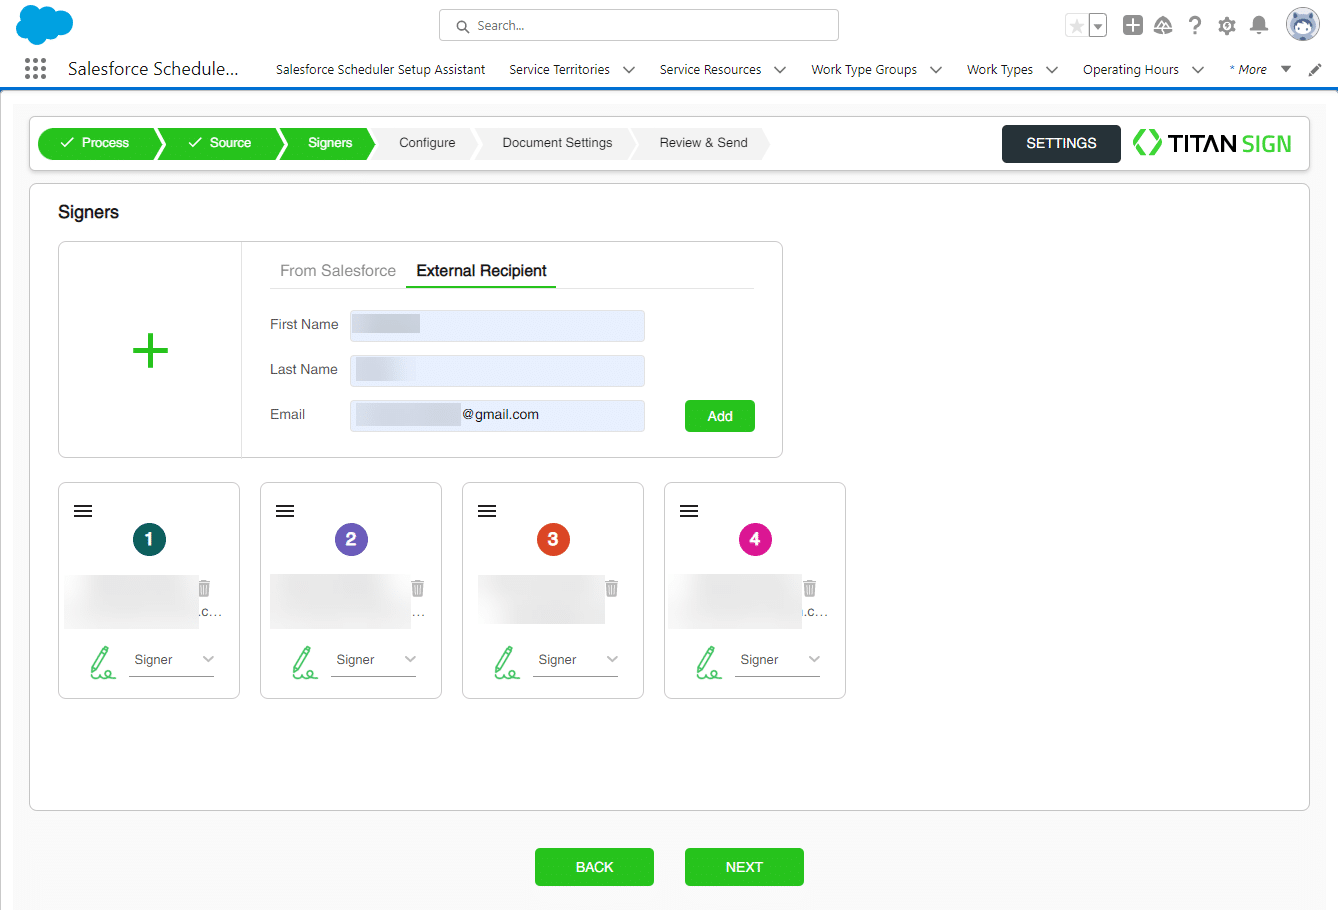 Signers screen - External Recipients option